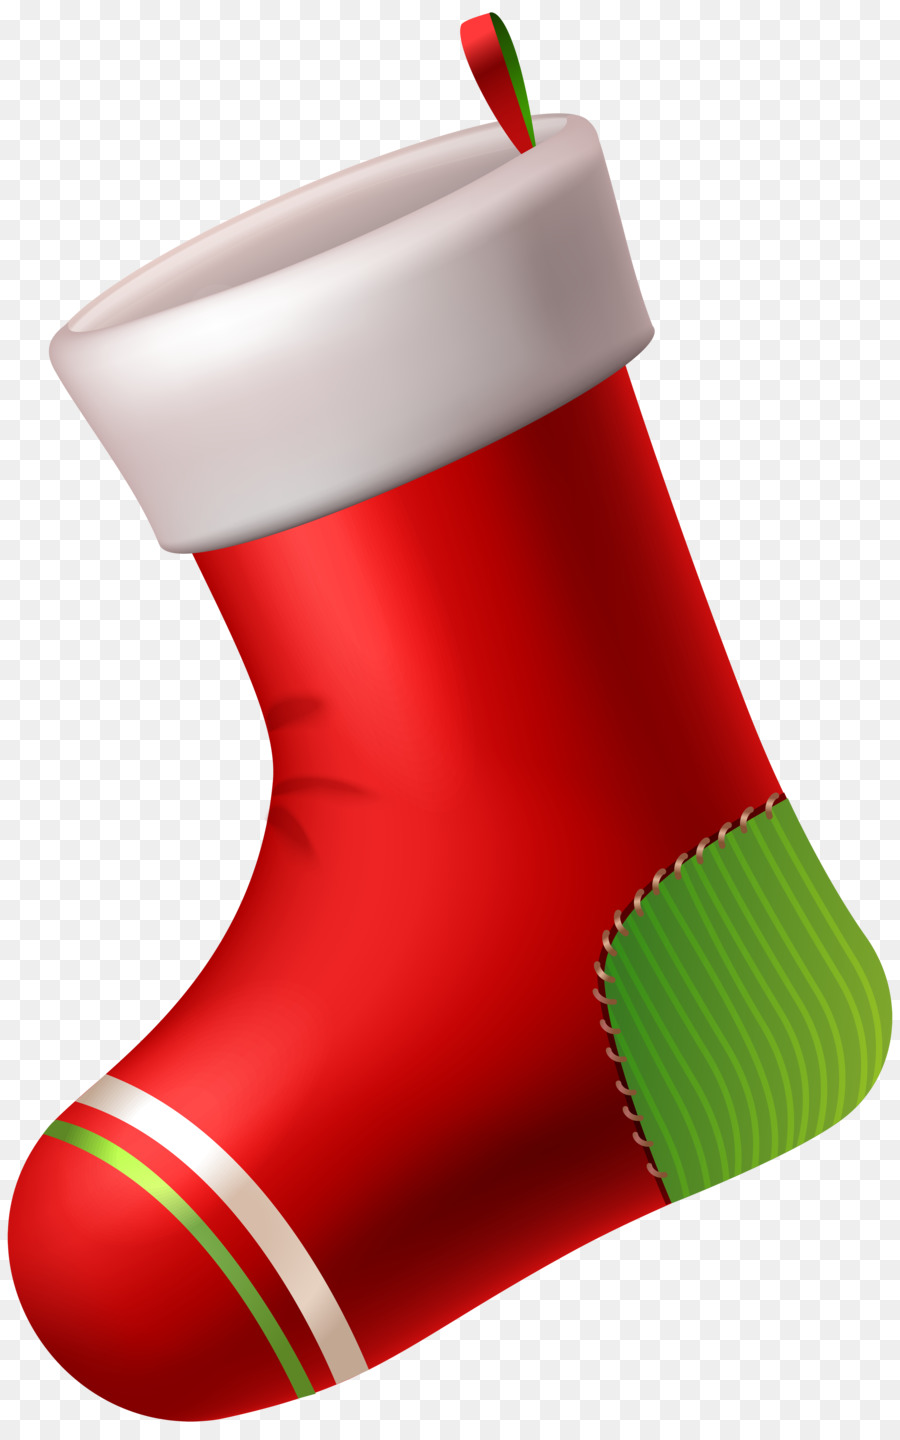 Christmas Stockings Christmas ornament - christmas stocking png download - 5021*8000 - Free Transparent Christmas Stockings png Download.